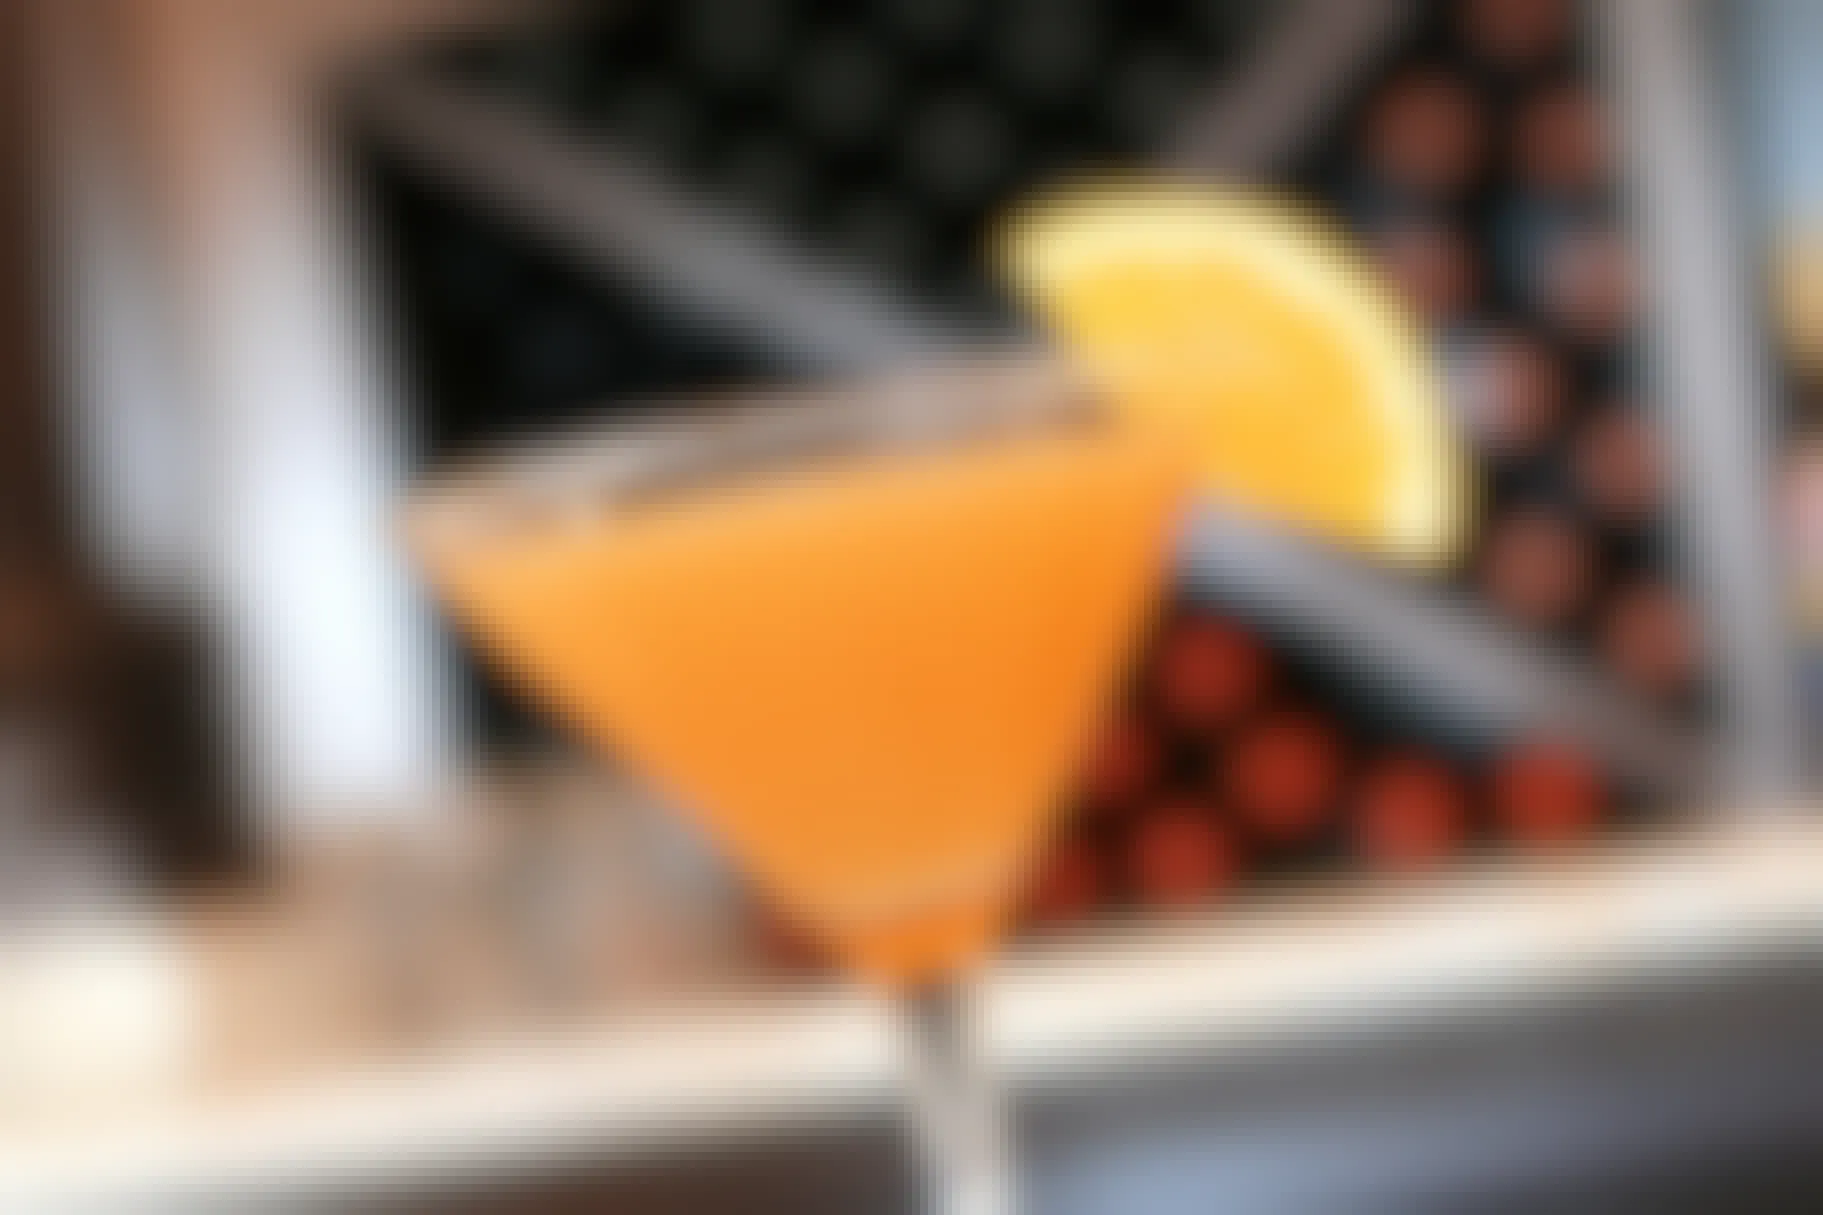 An orange martini at Bravo Italian Kitchen